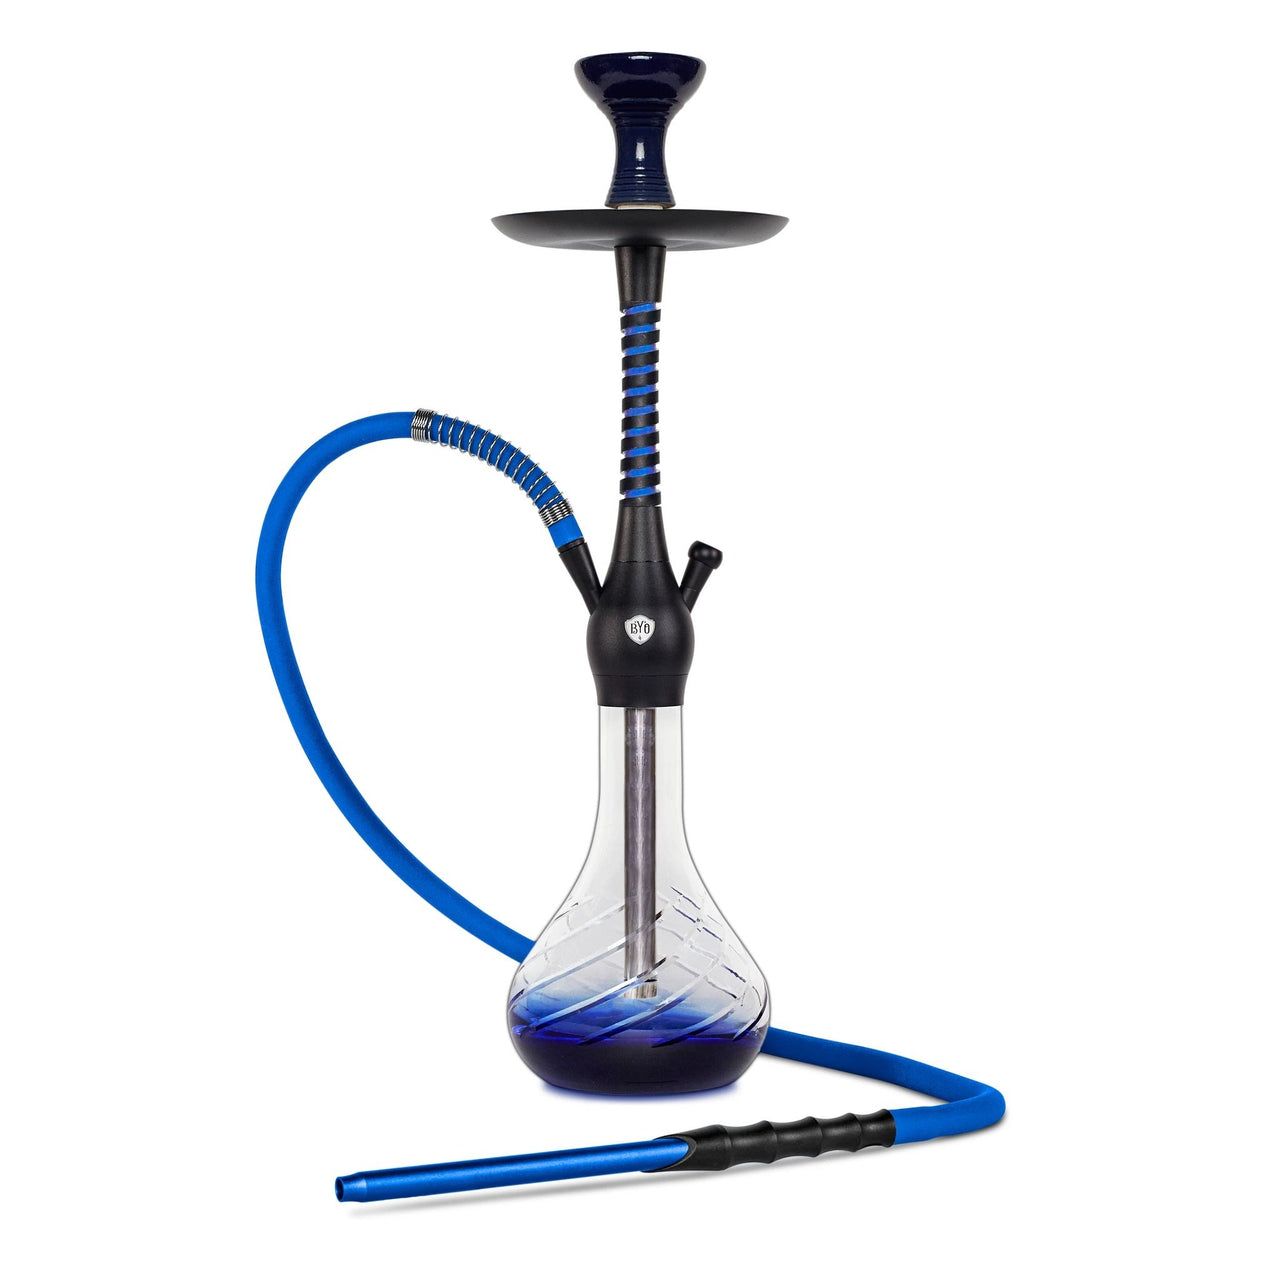 BYO Spirex Hookah 22" blue stem matching clear base and hose